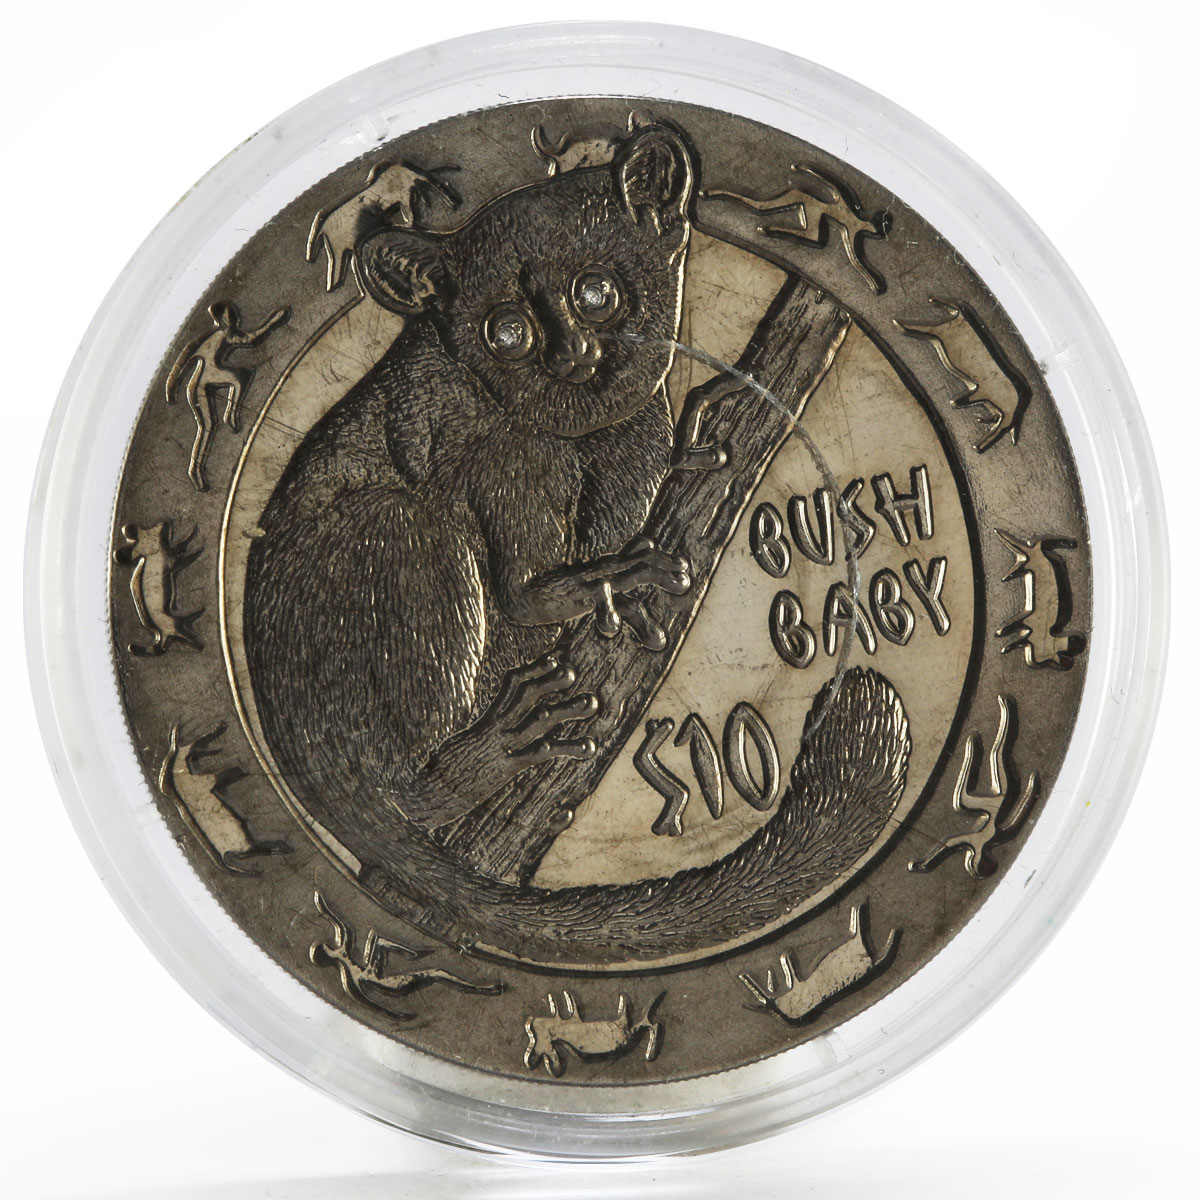 Sierra Leone 10 dollars Nocturnal Animals series Bush Baby silver coin 2008